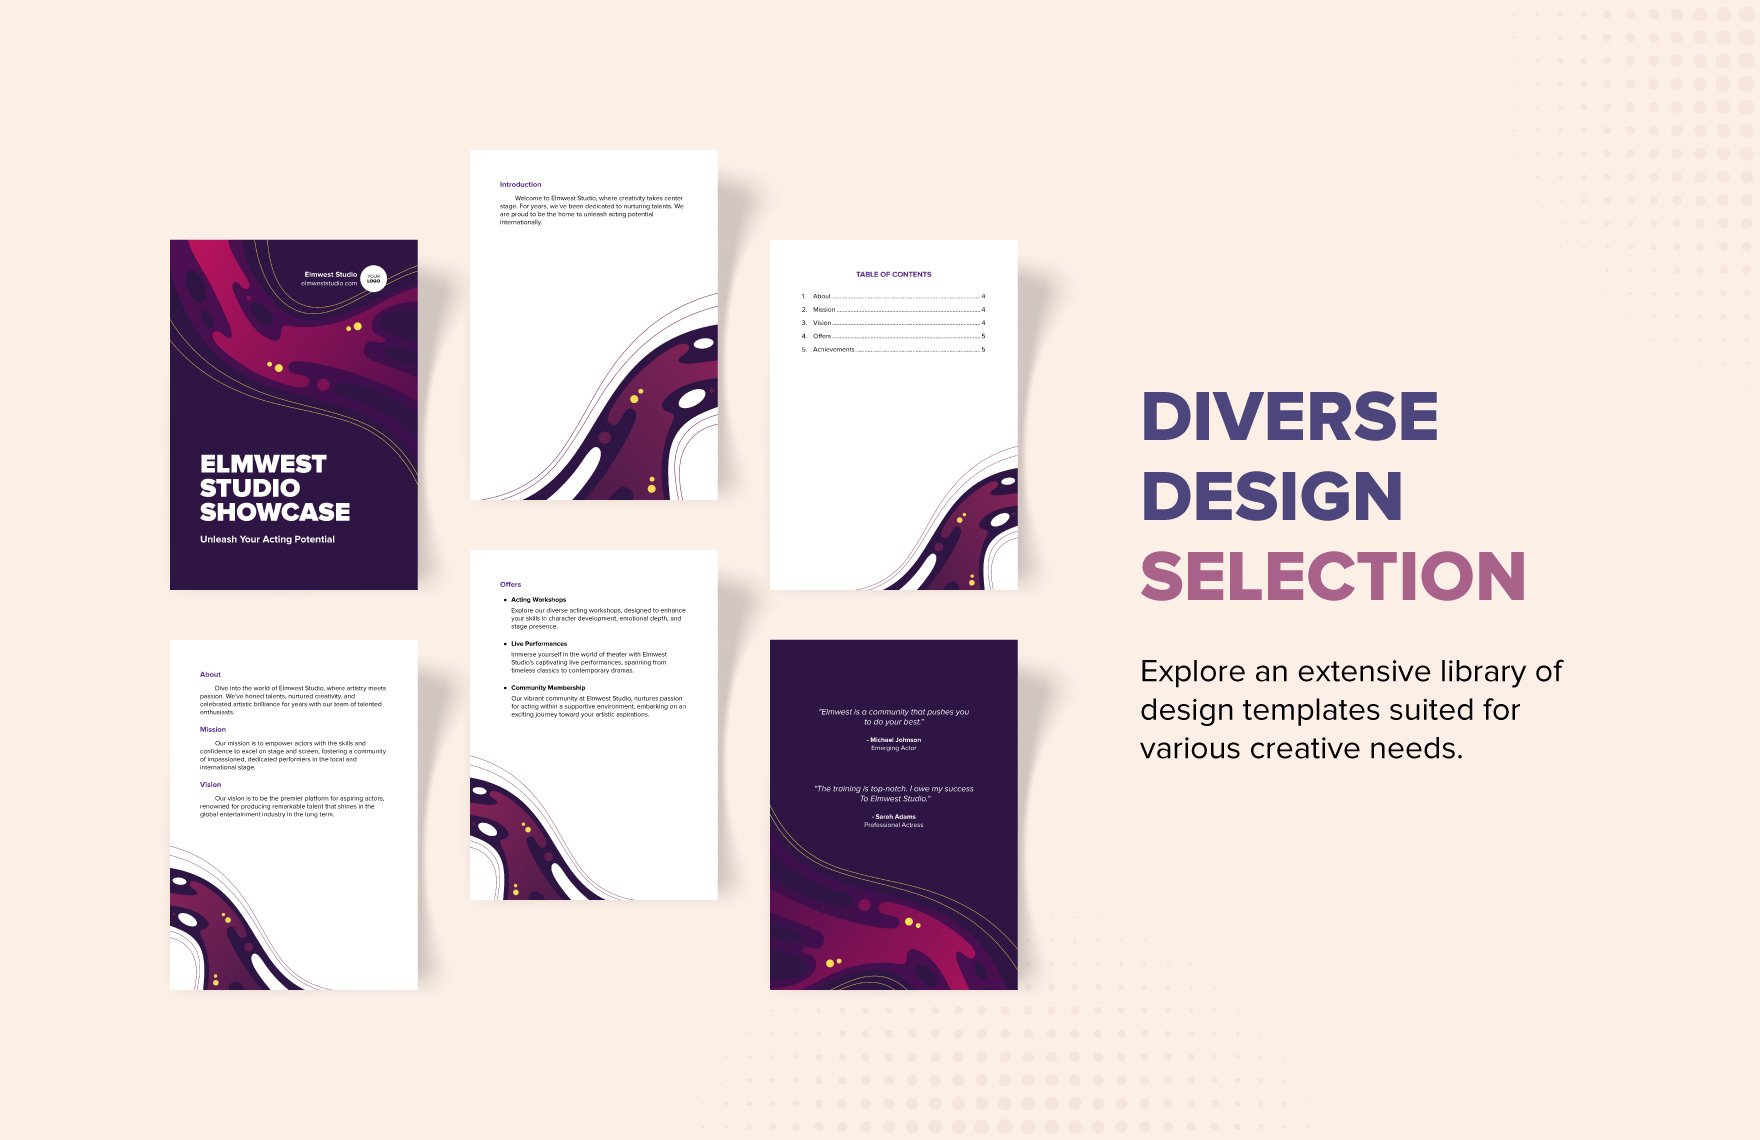 Booklet Design Template